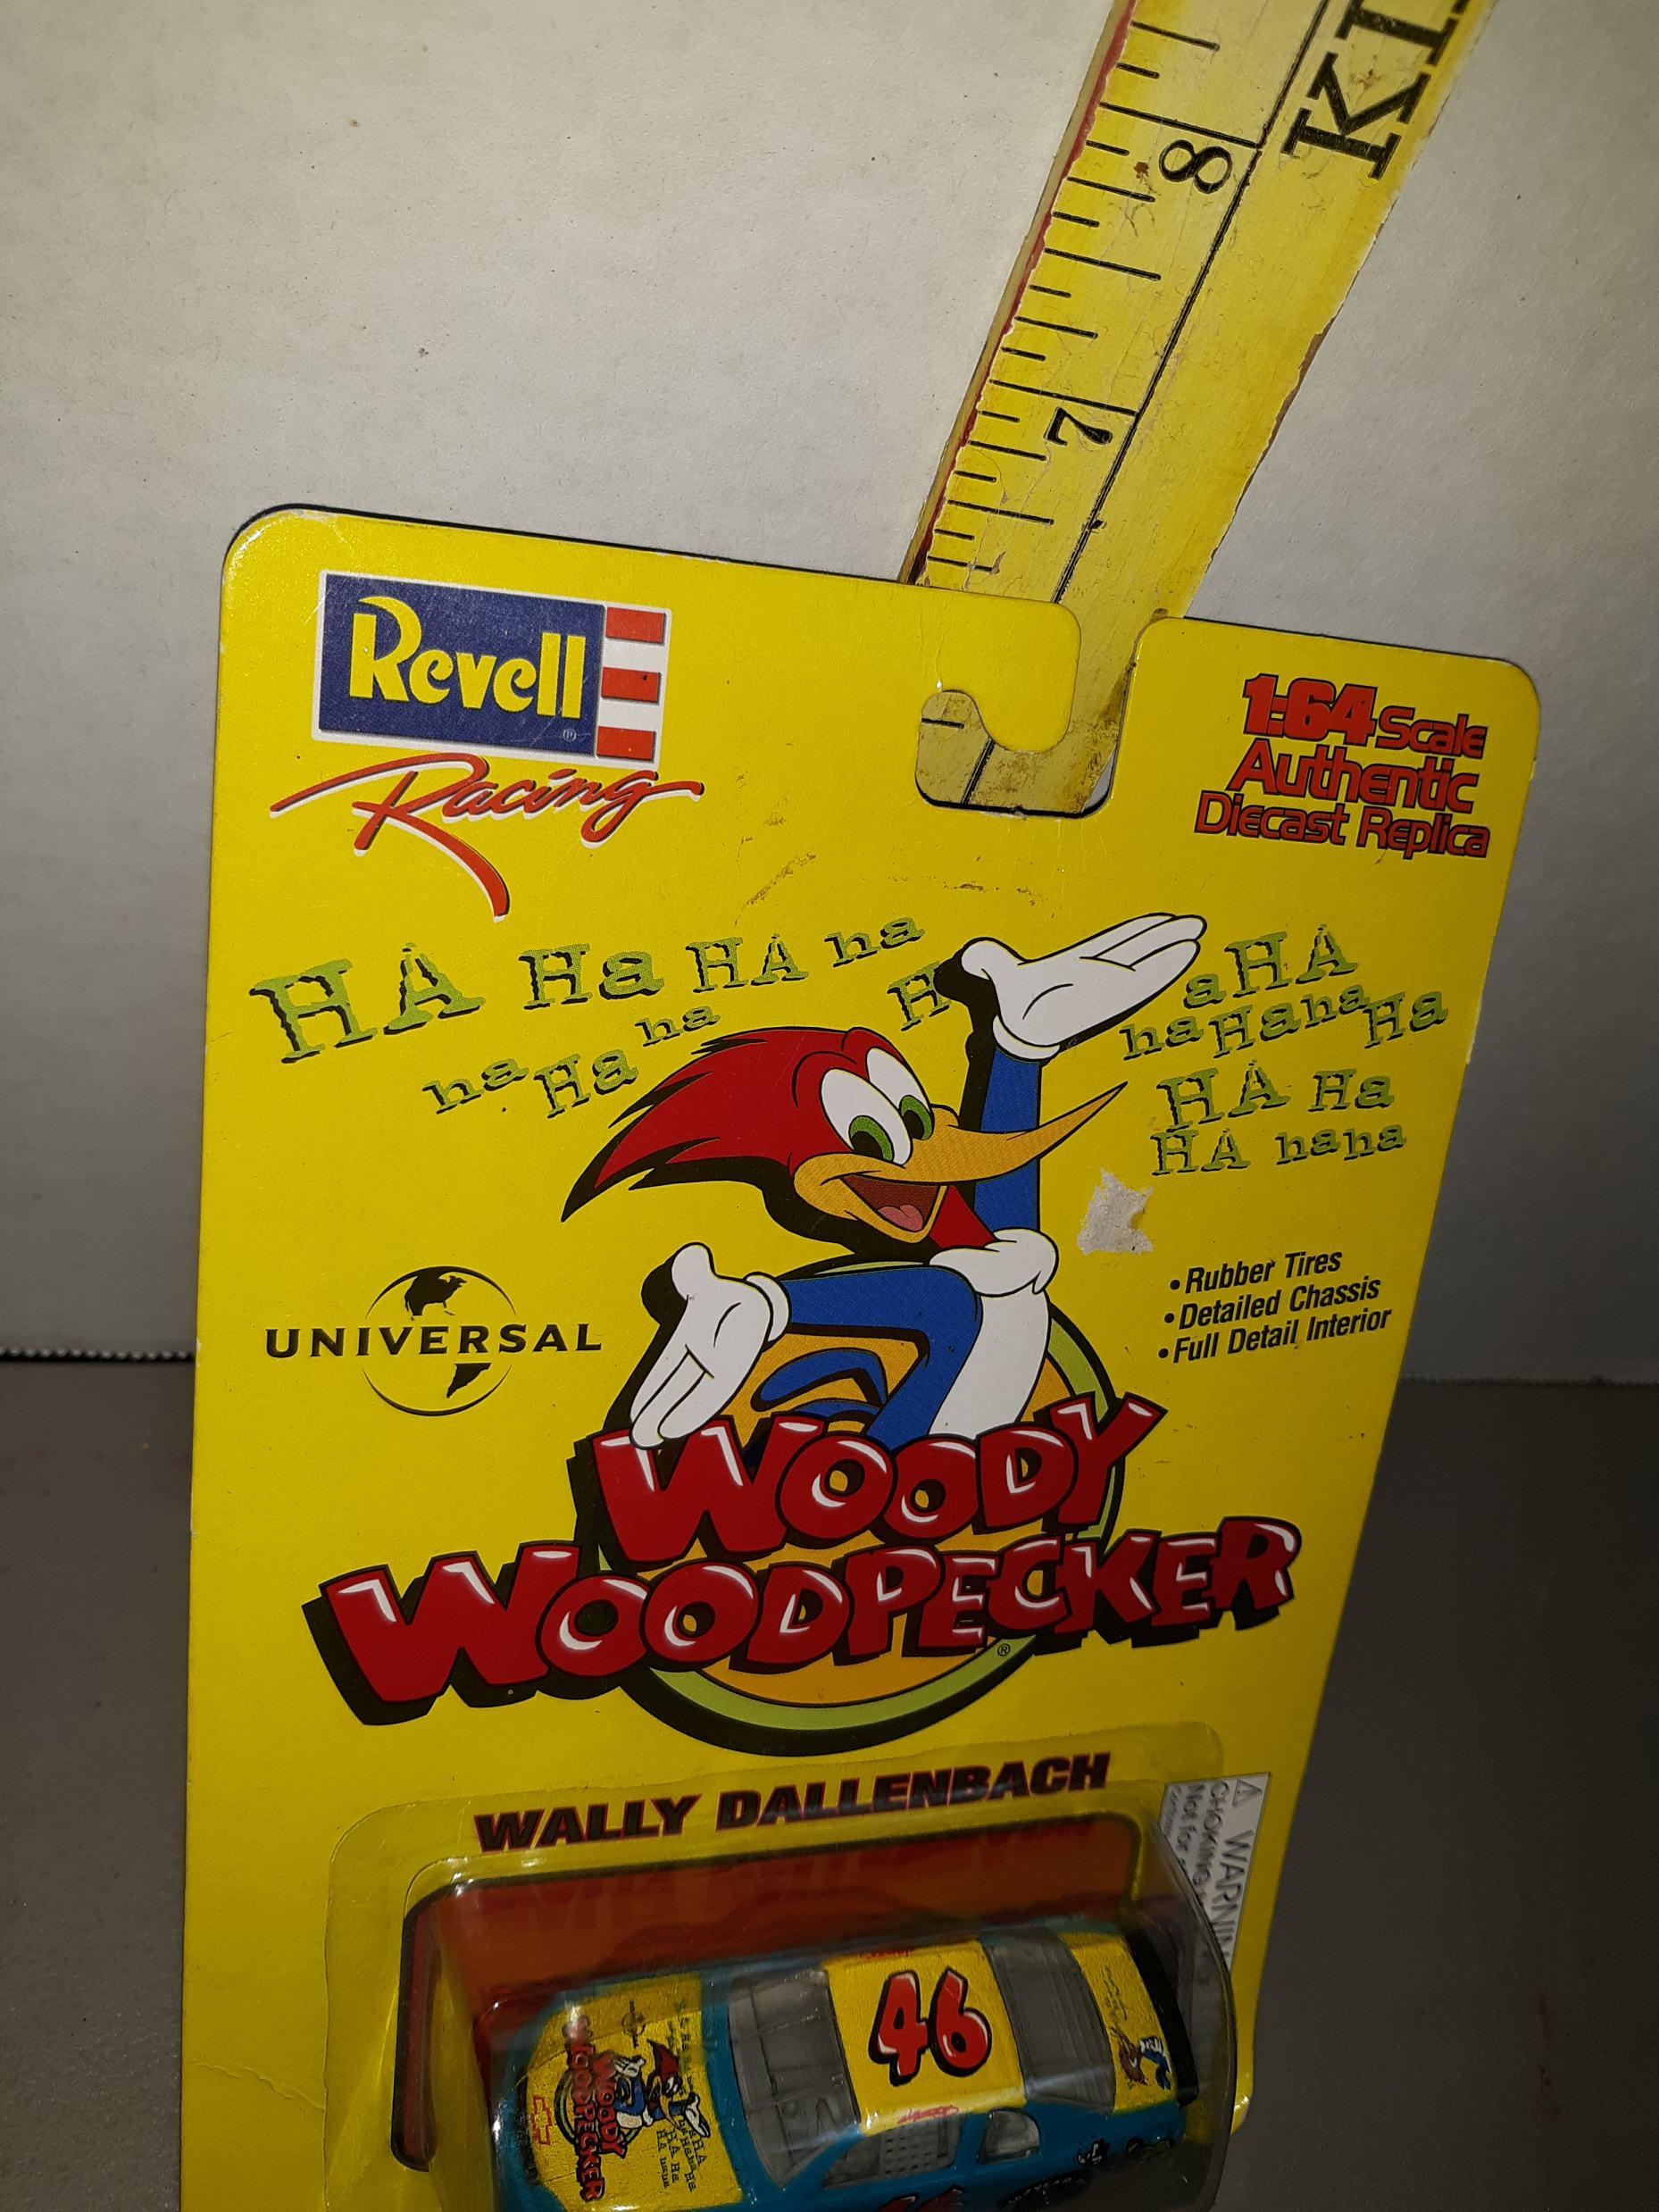 Revell Woody Woodpecker Wally Dallenbach, unopened